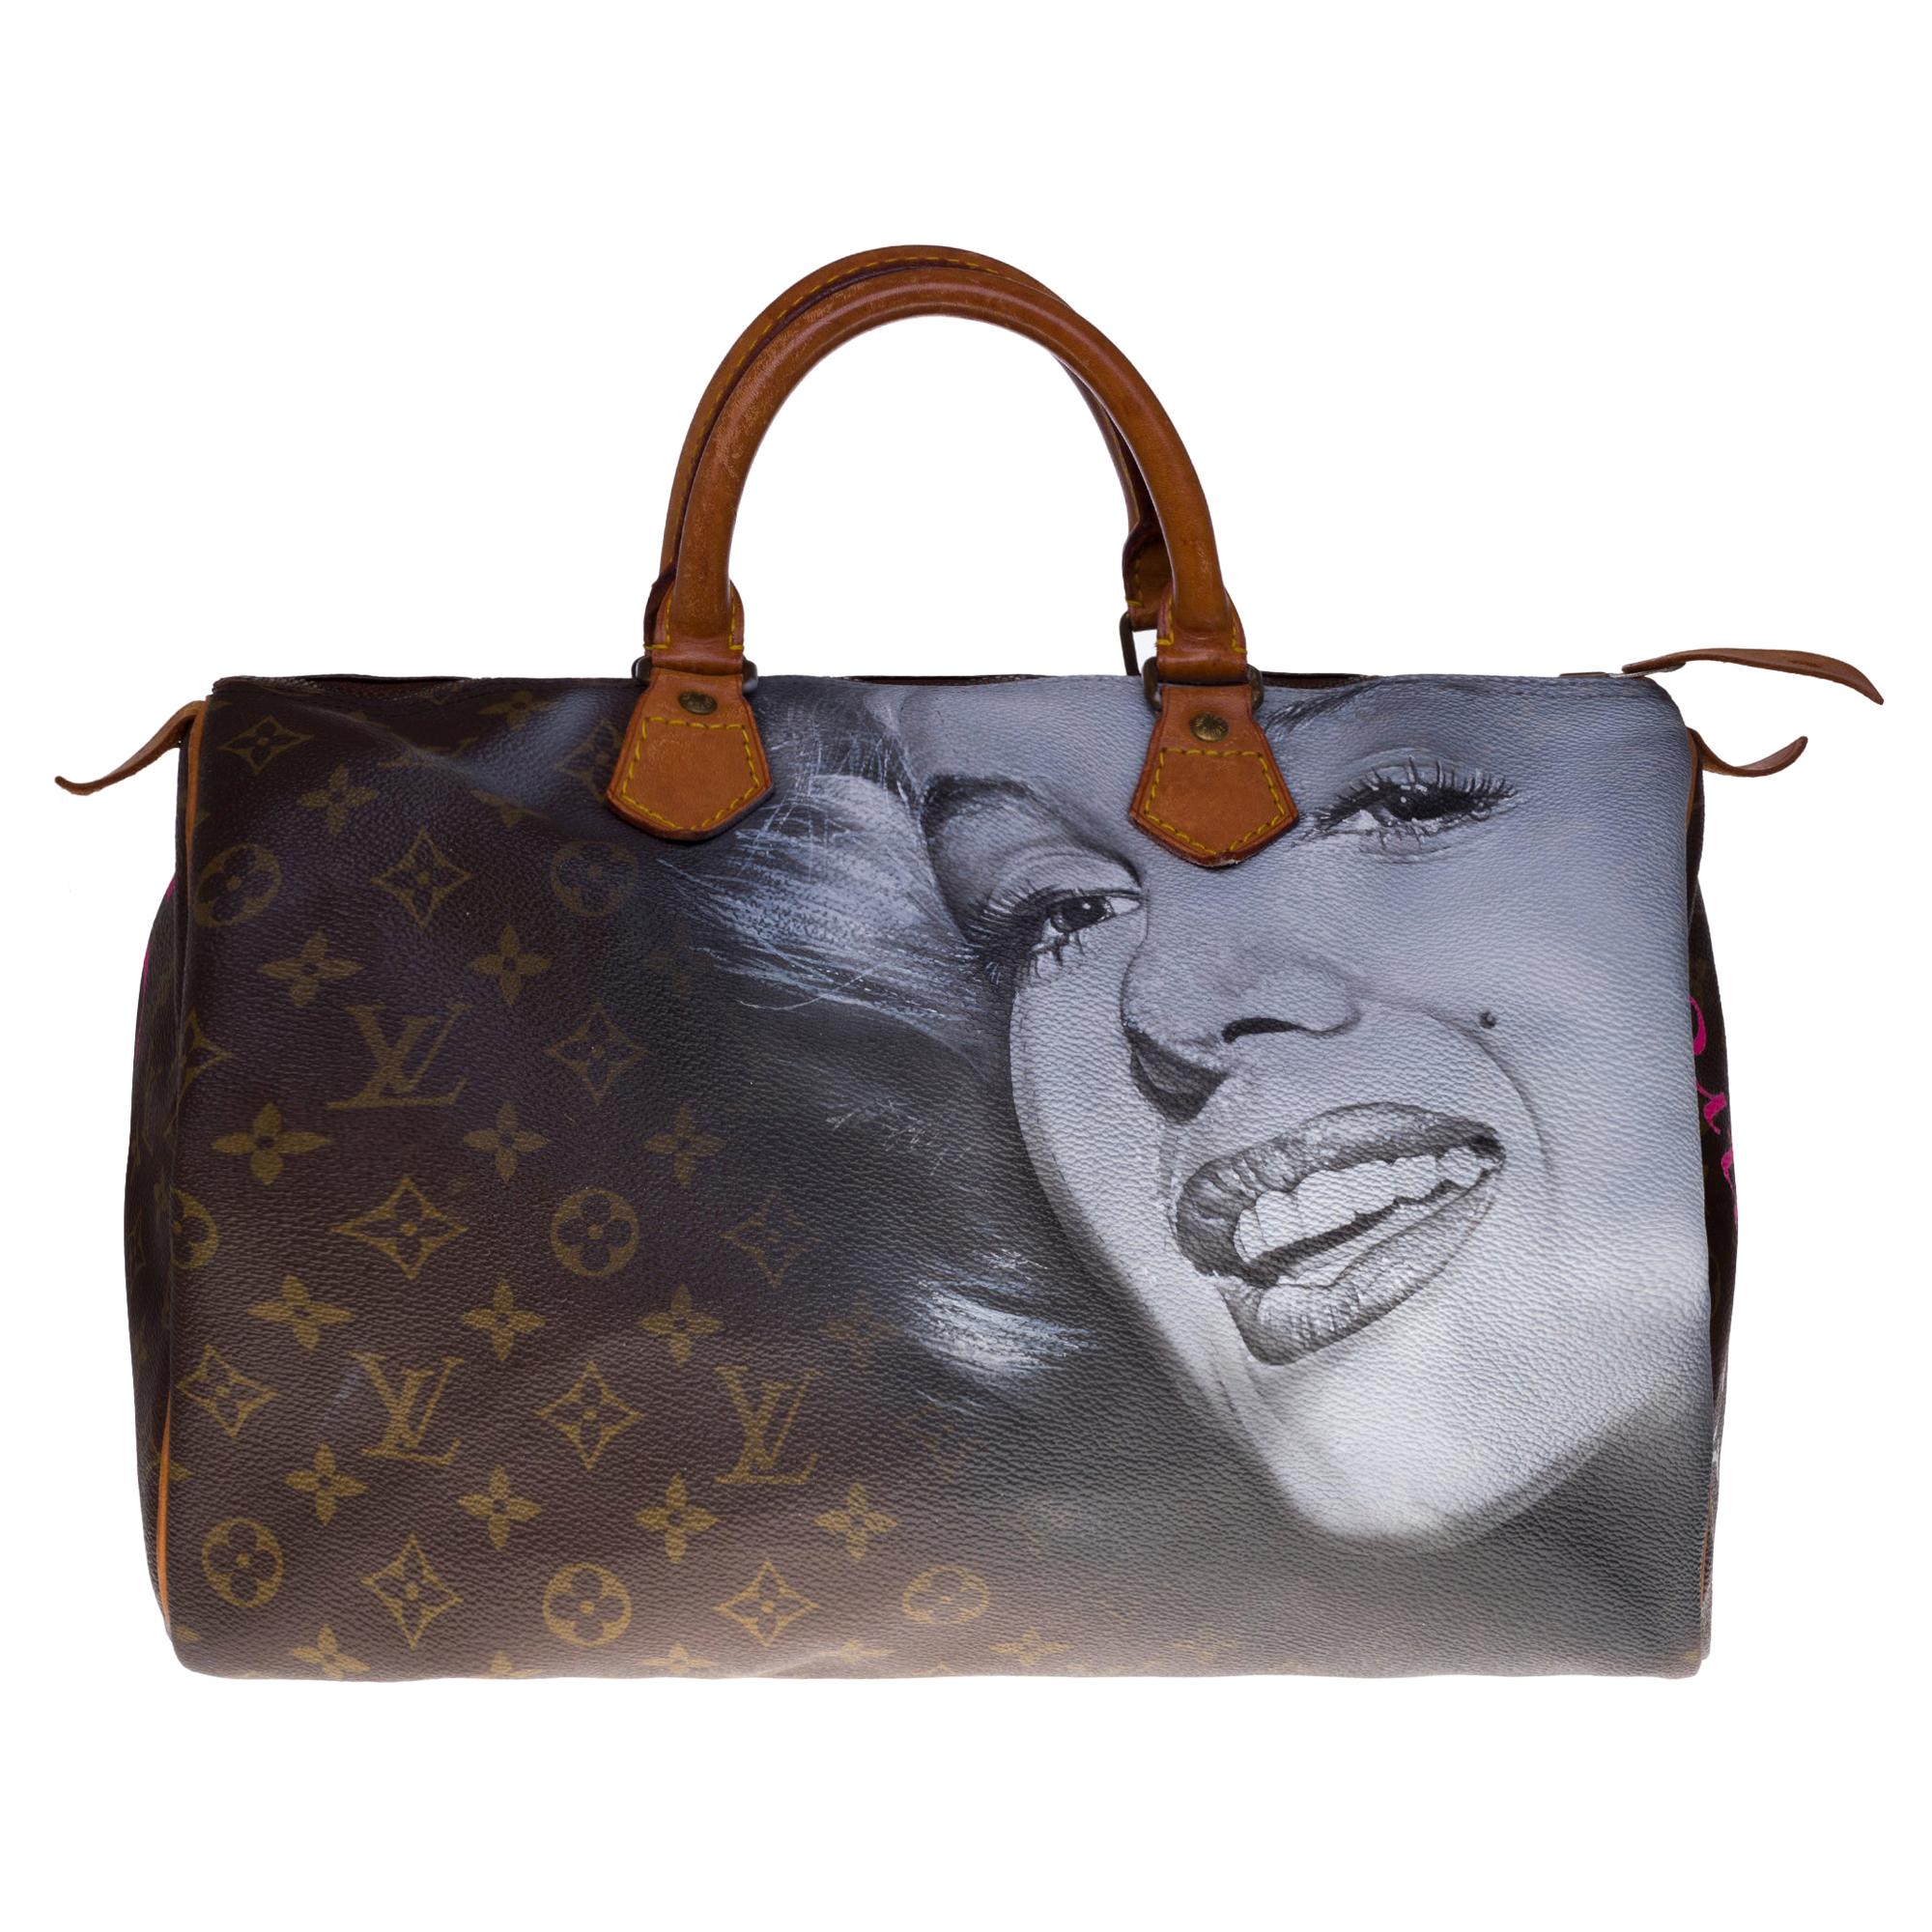 Customized Louis Vuitton Speedy 35 "Marilyn Monroe" handbag in Monogram canvas